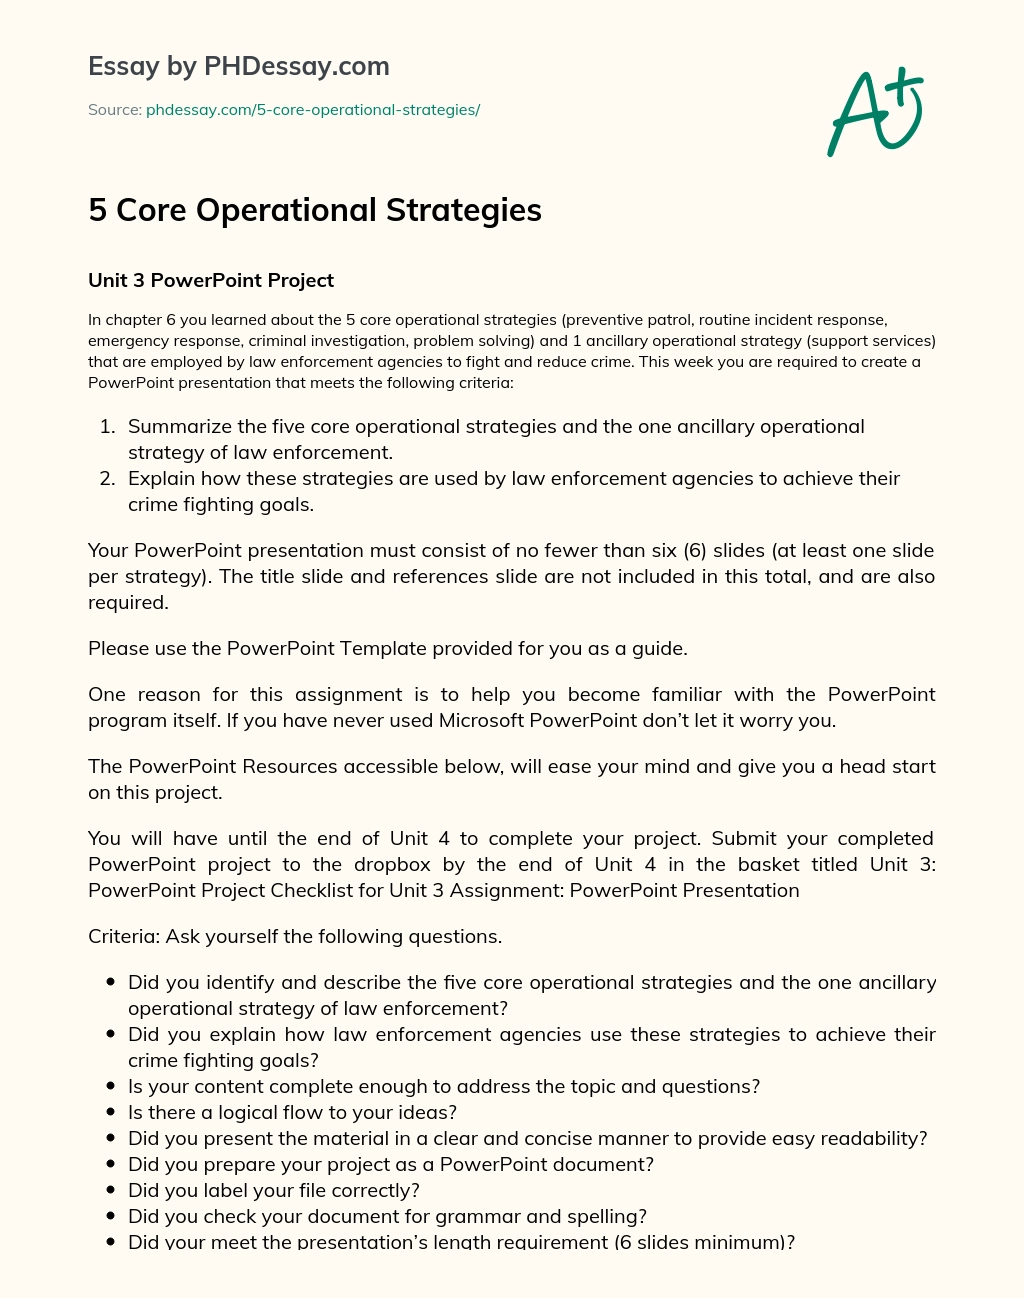 5 Core Operational Strategies essay